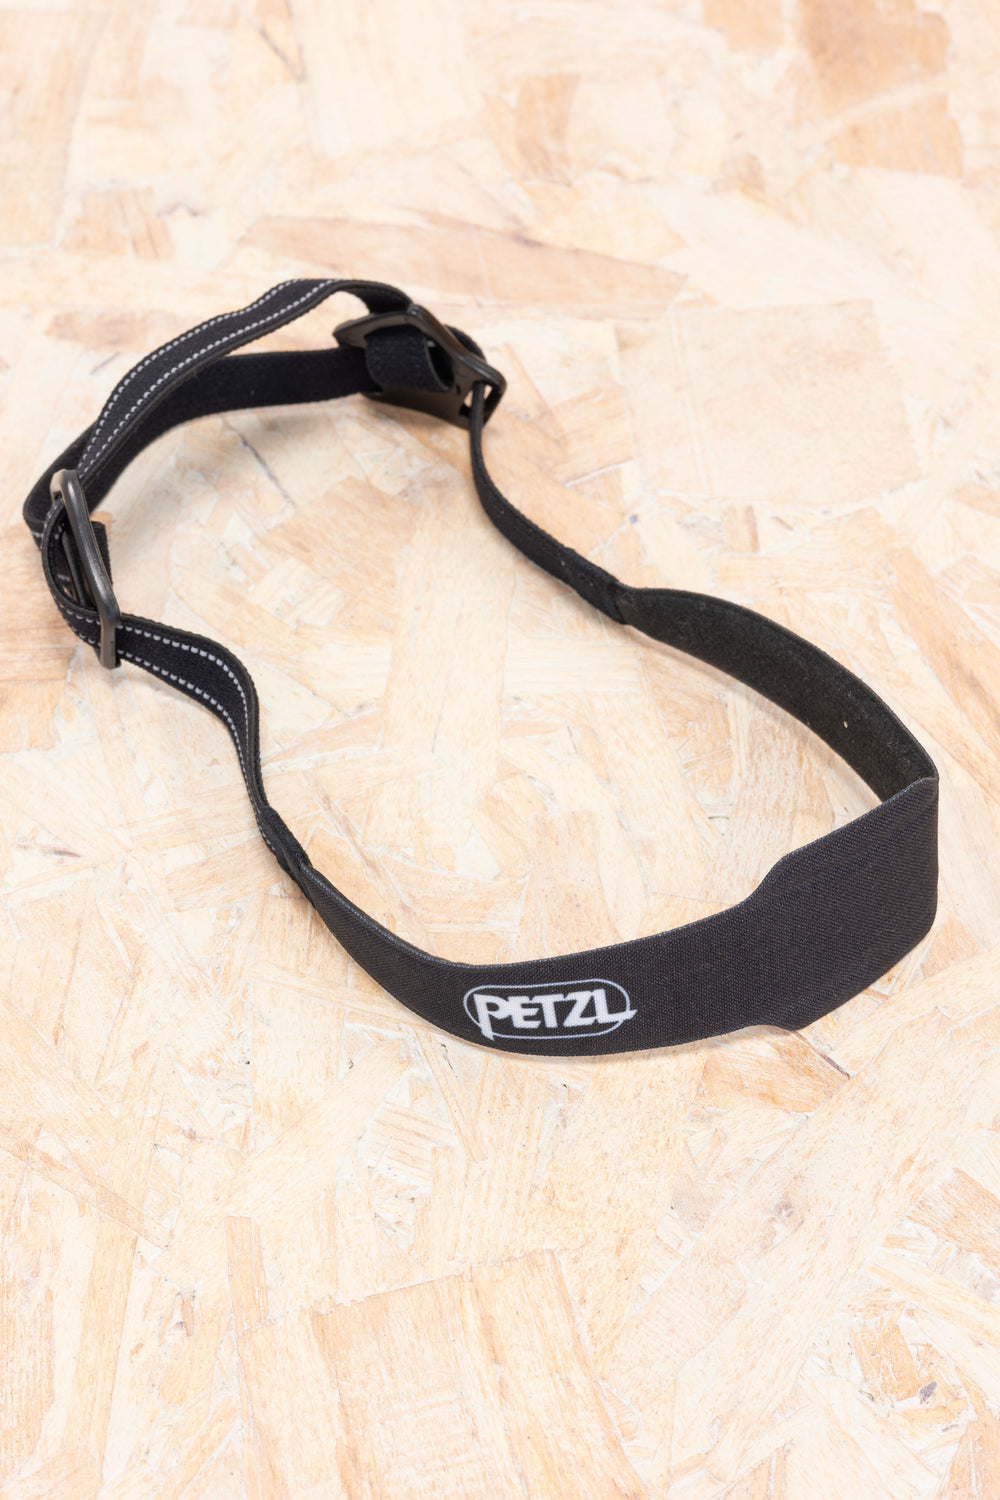 Petzl - Replacement Headband